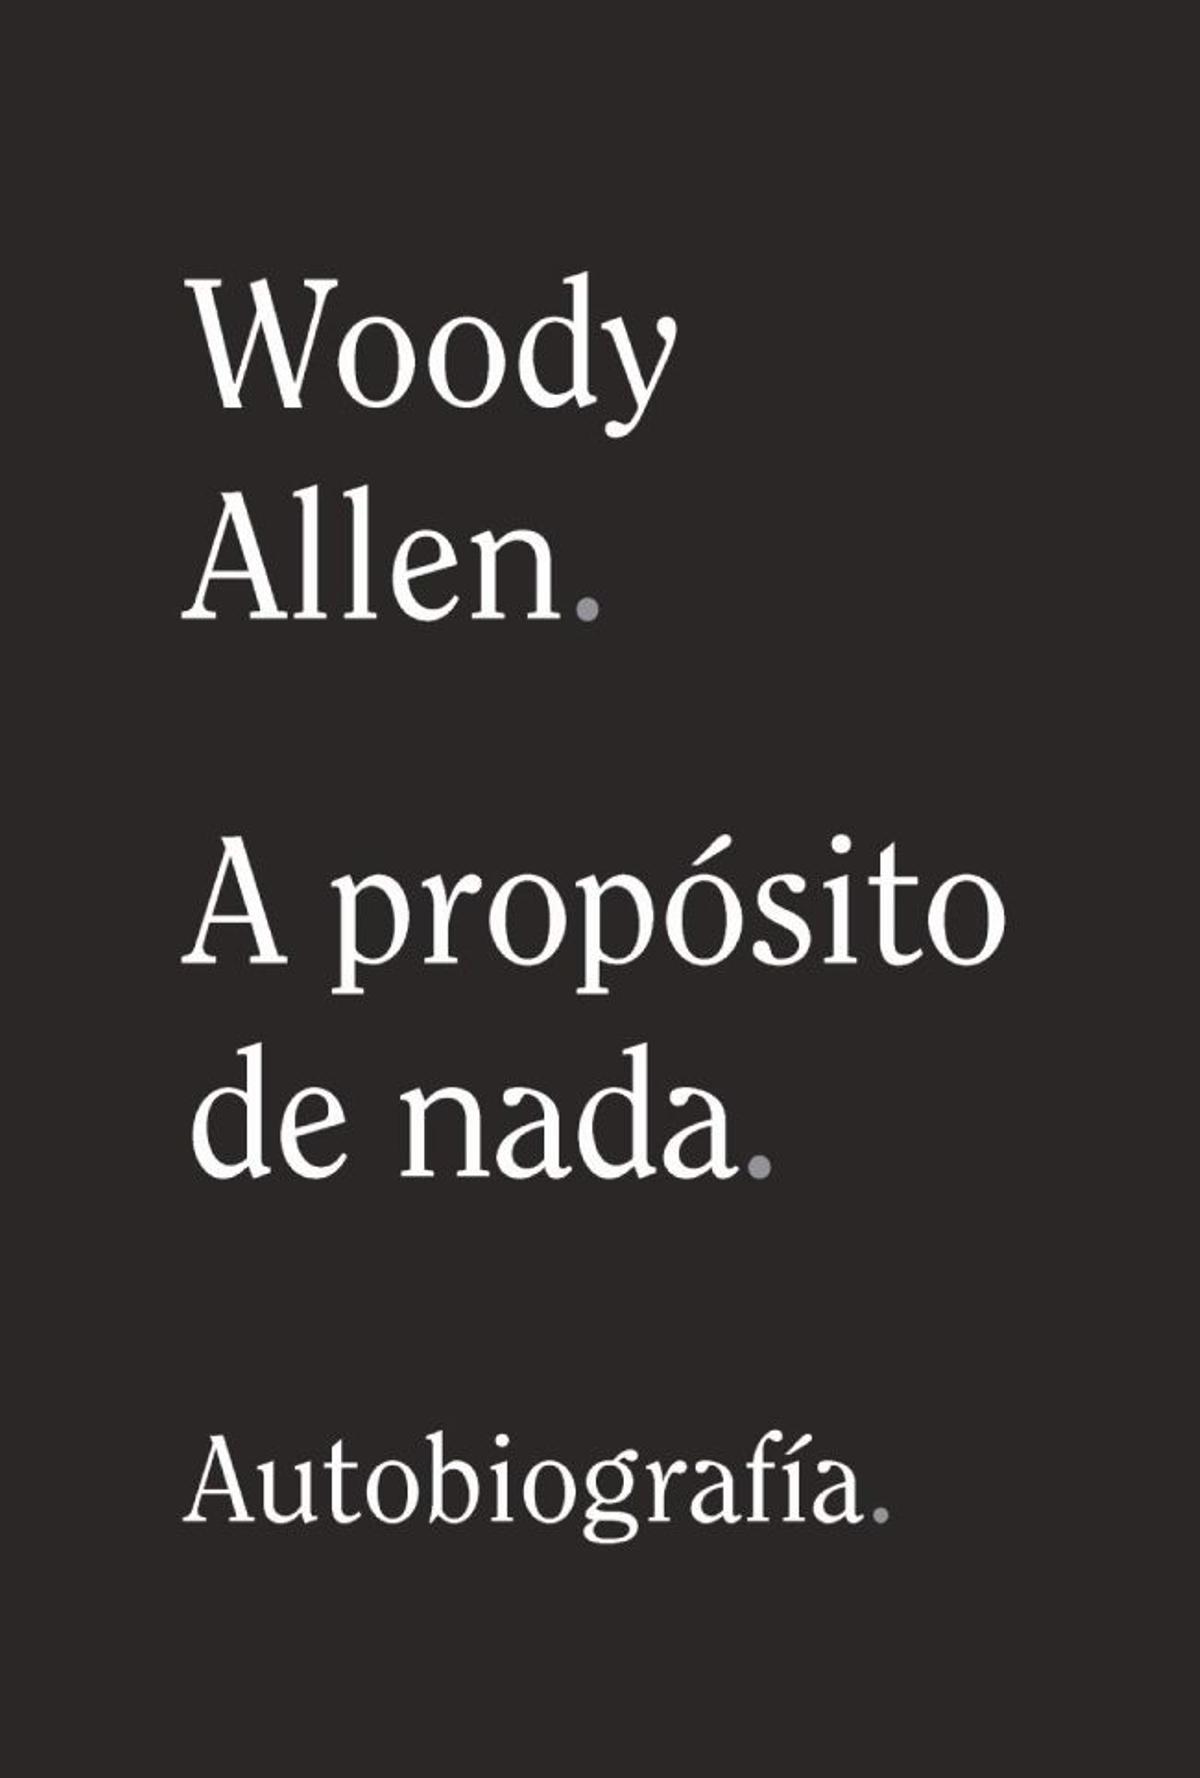 A propósito de nada de Woody Allen